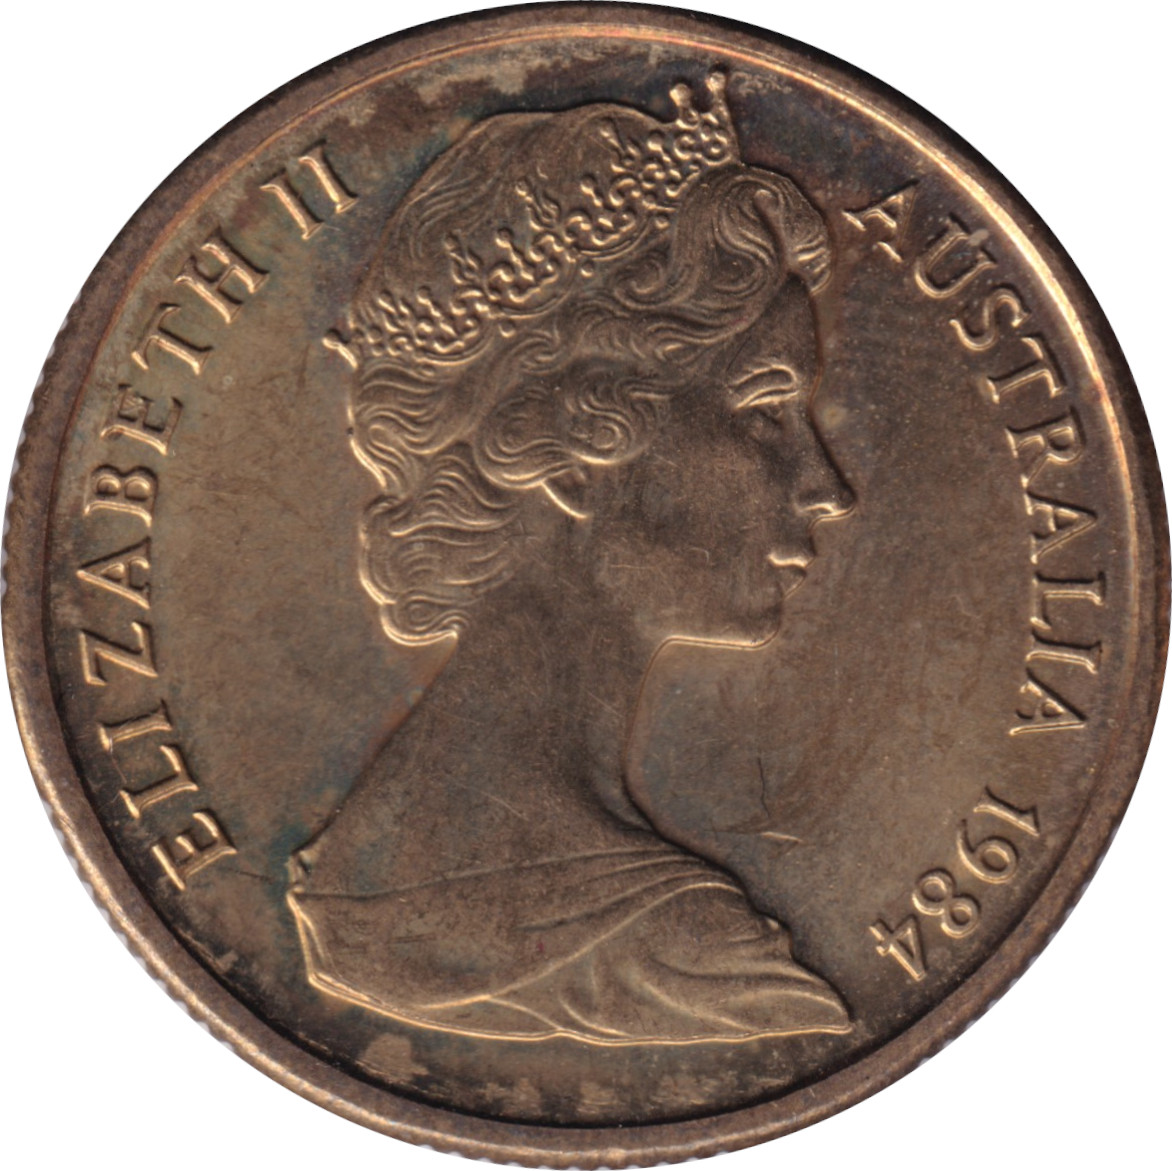 1 dollar - Elizabeth II - Buste mature